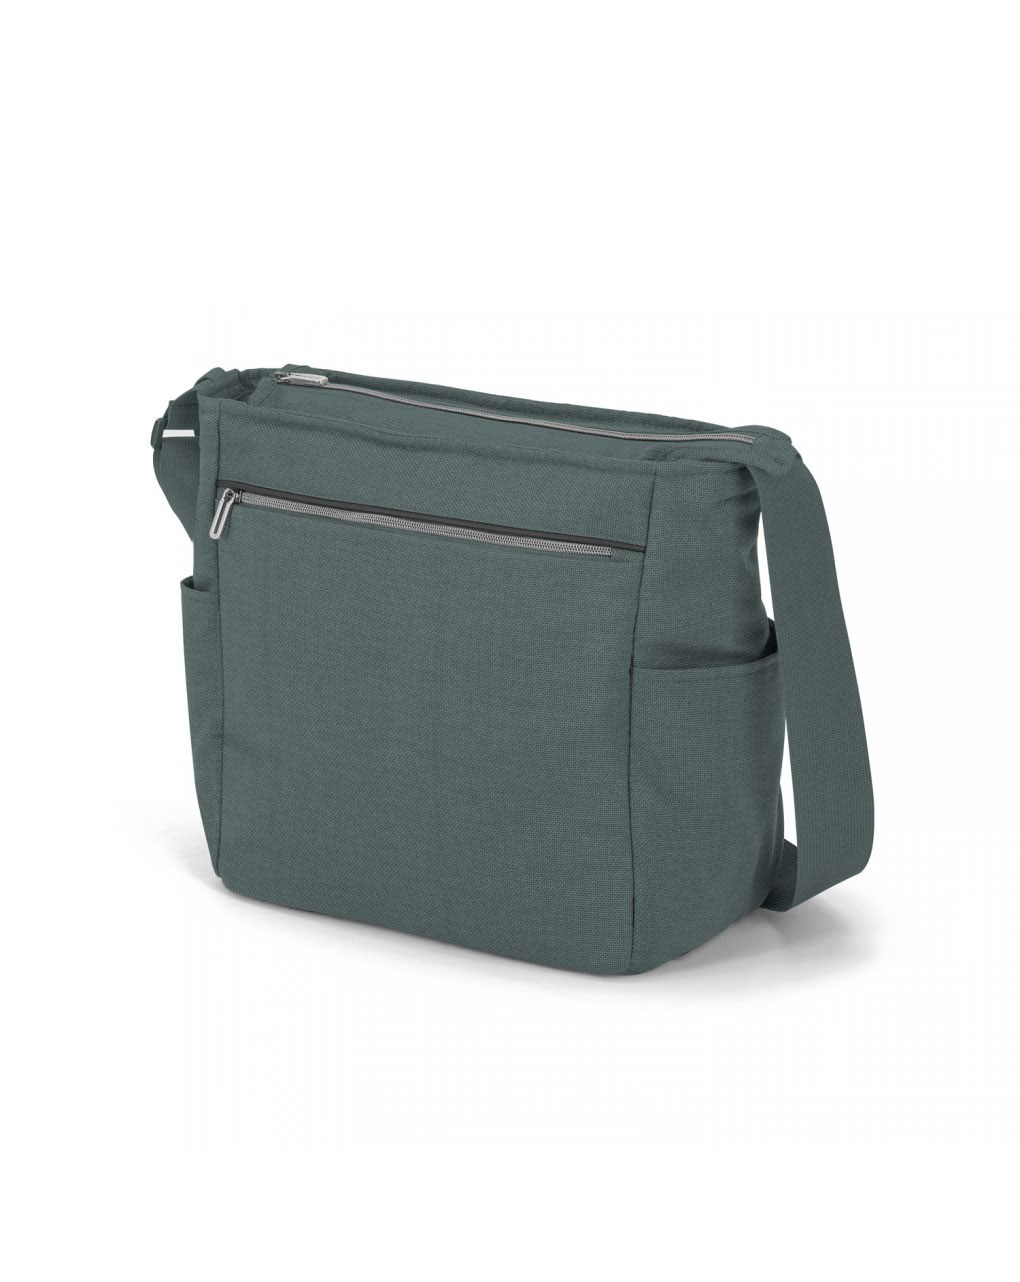 Inglesina τσάντα-αλλαξιέρα ώμου/χειρός aptica day bag emerald green - Inglesina